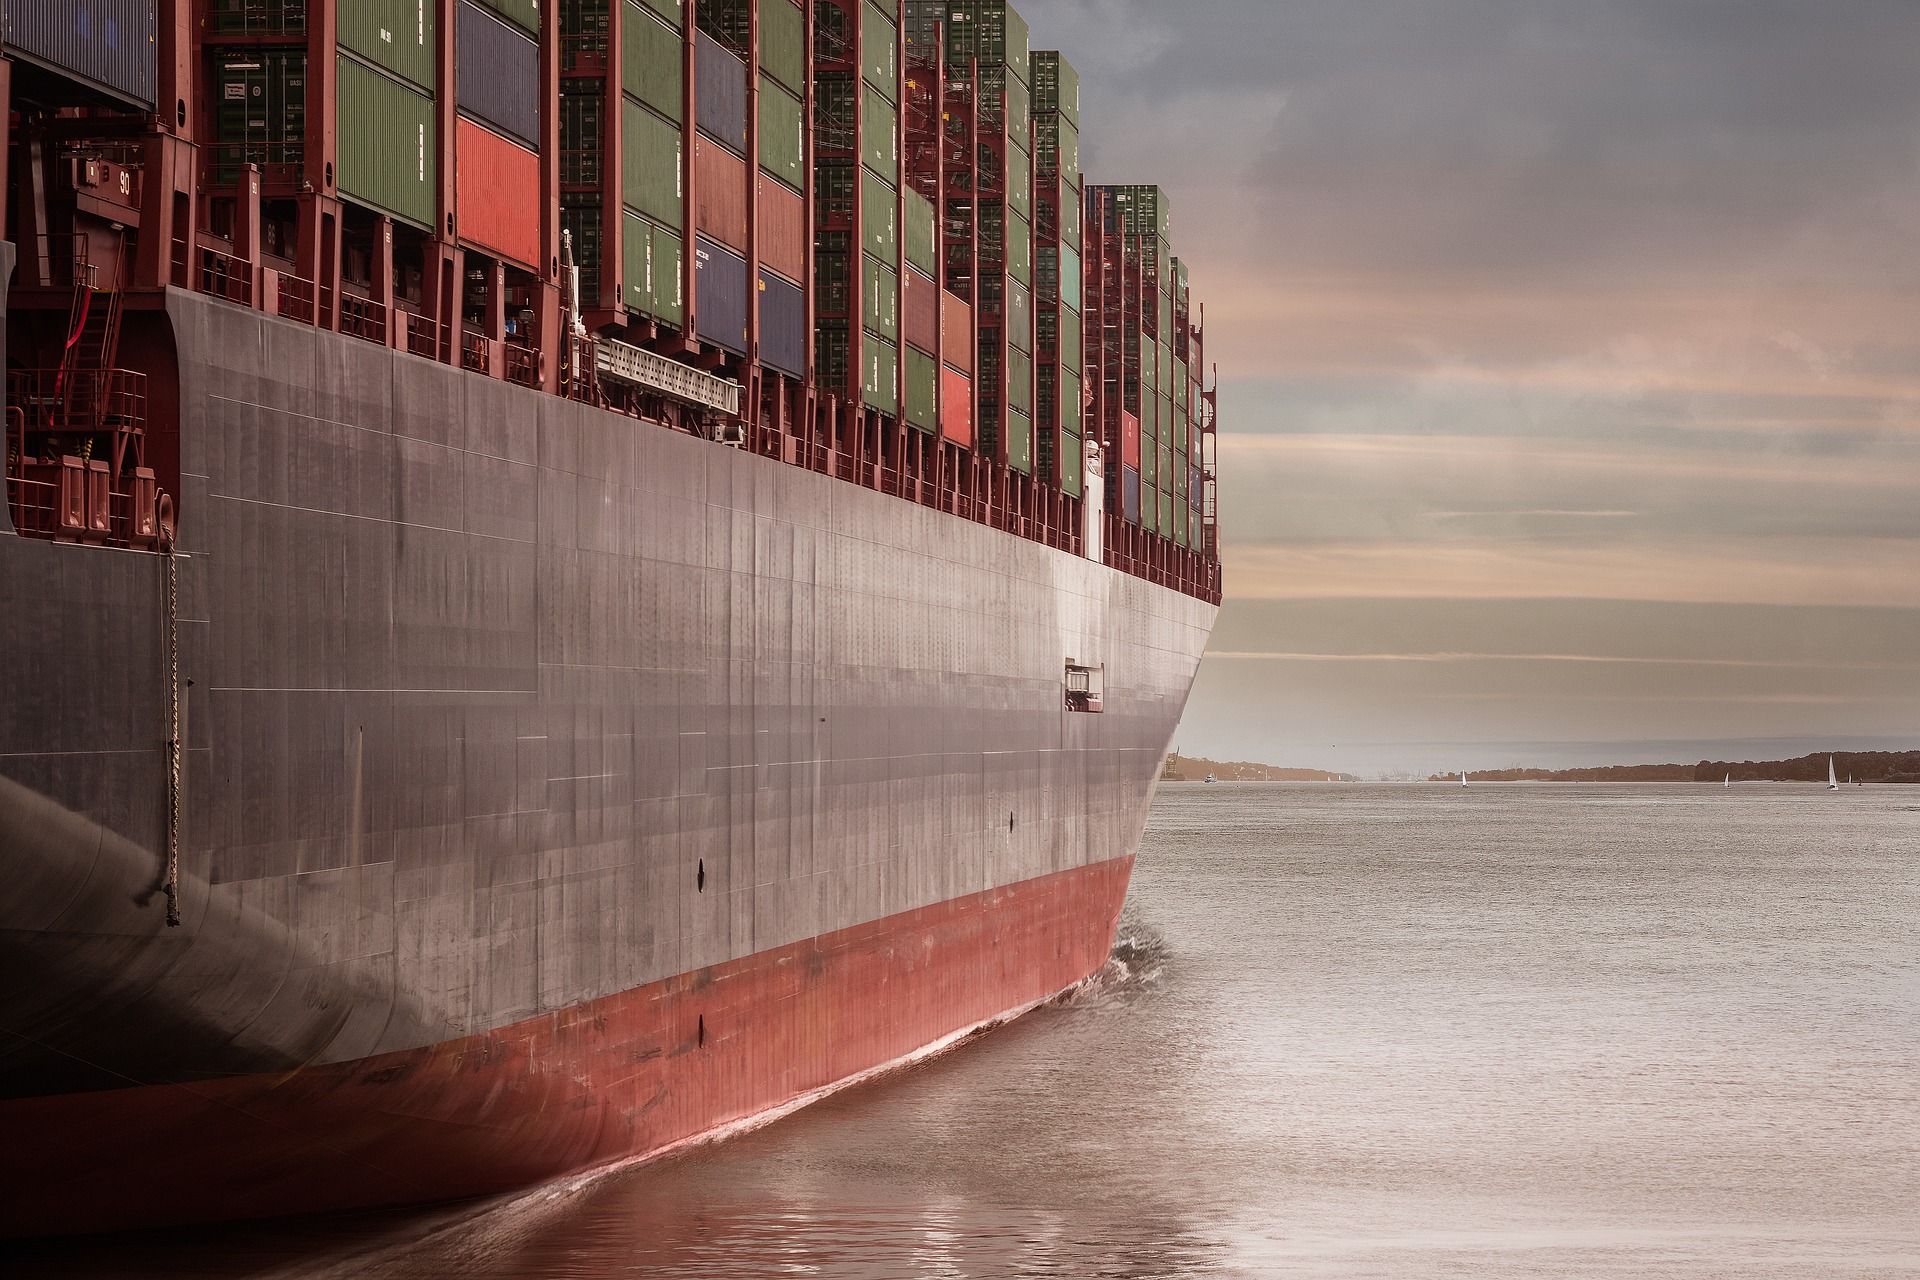 Eρευνα: 8 φορές πάνω οι παραγγελίες σε containerships